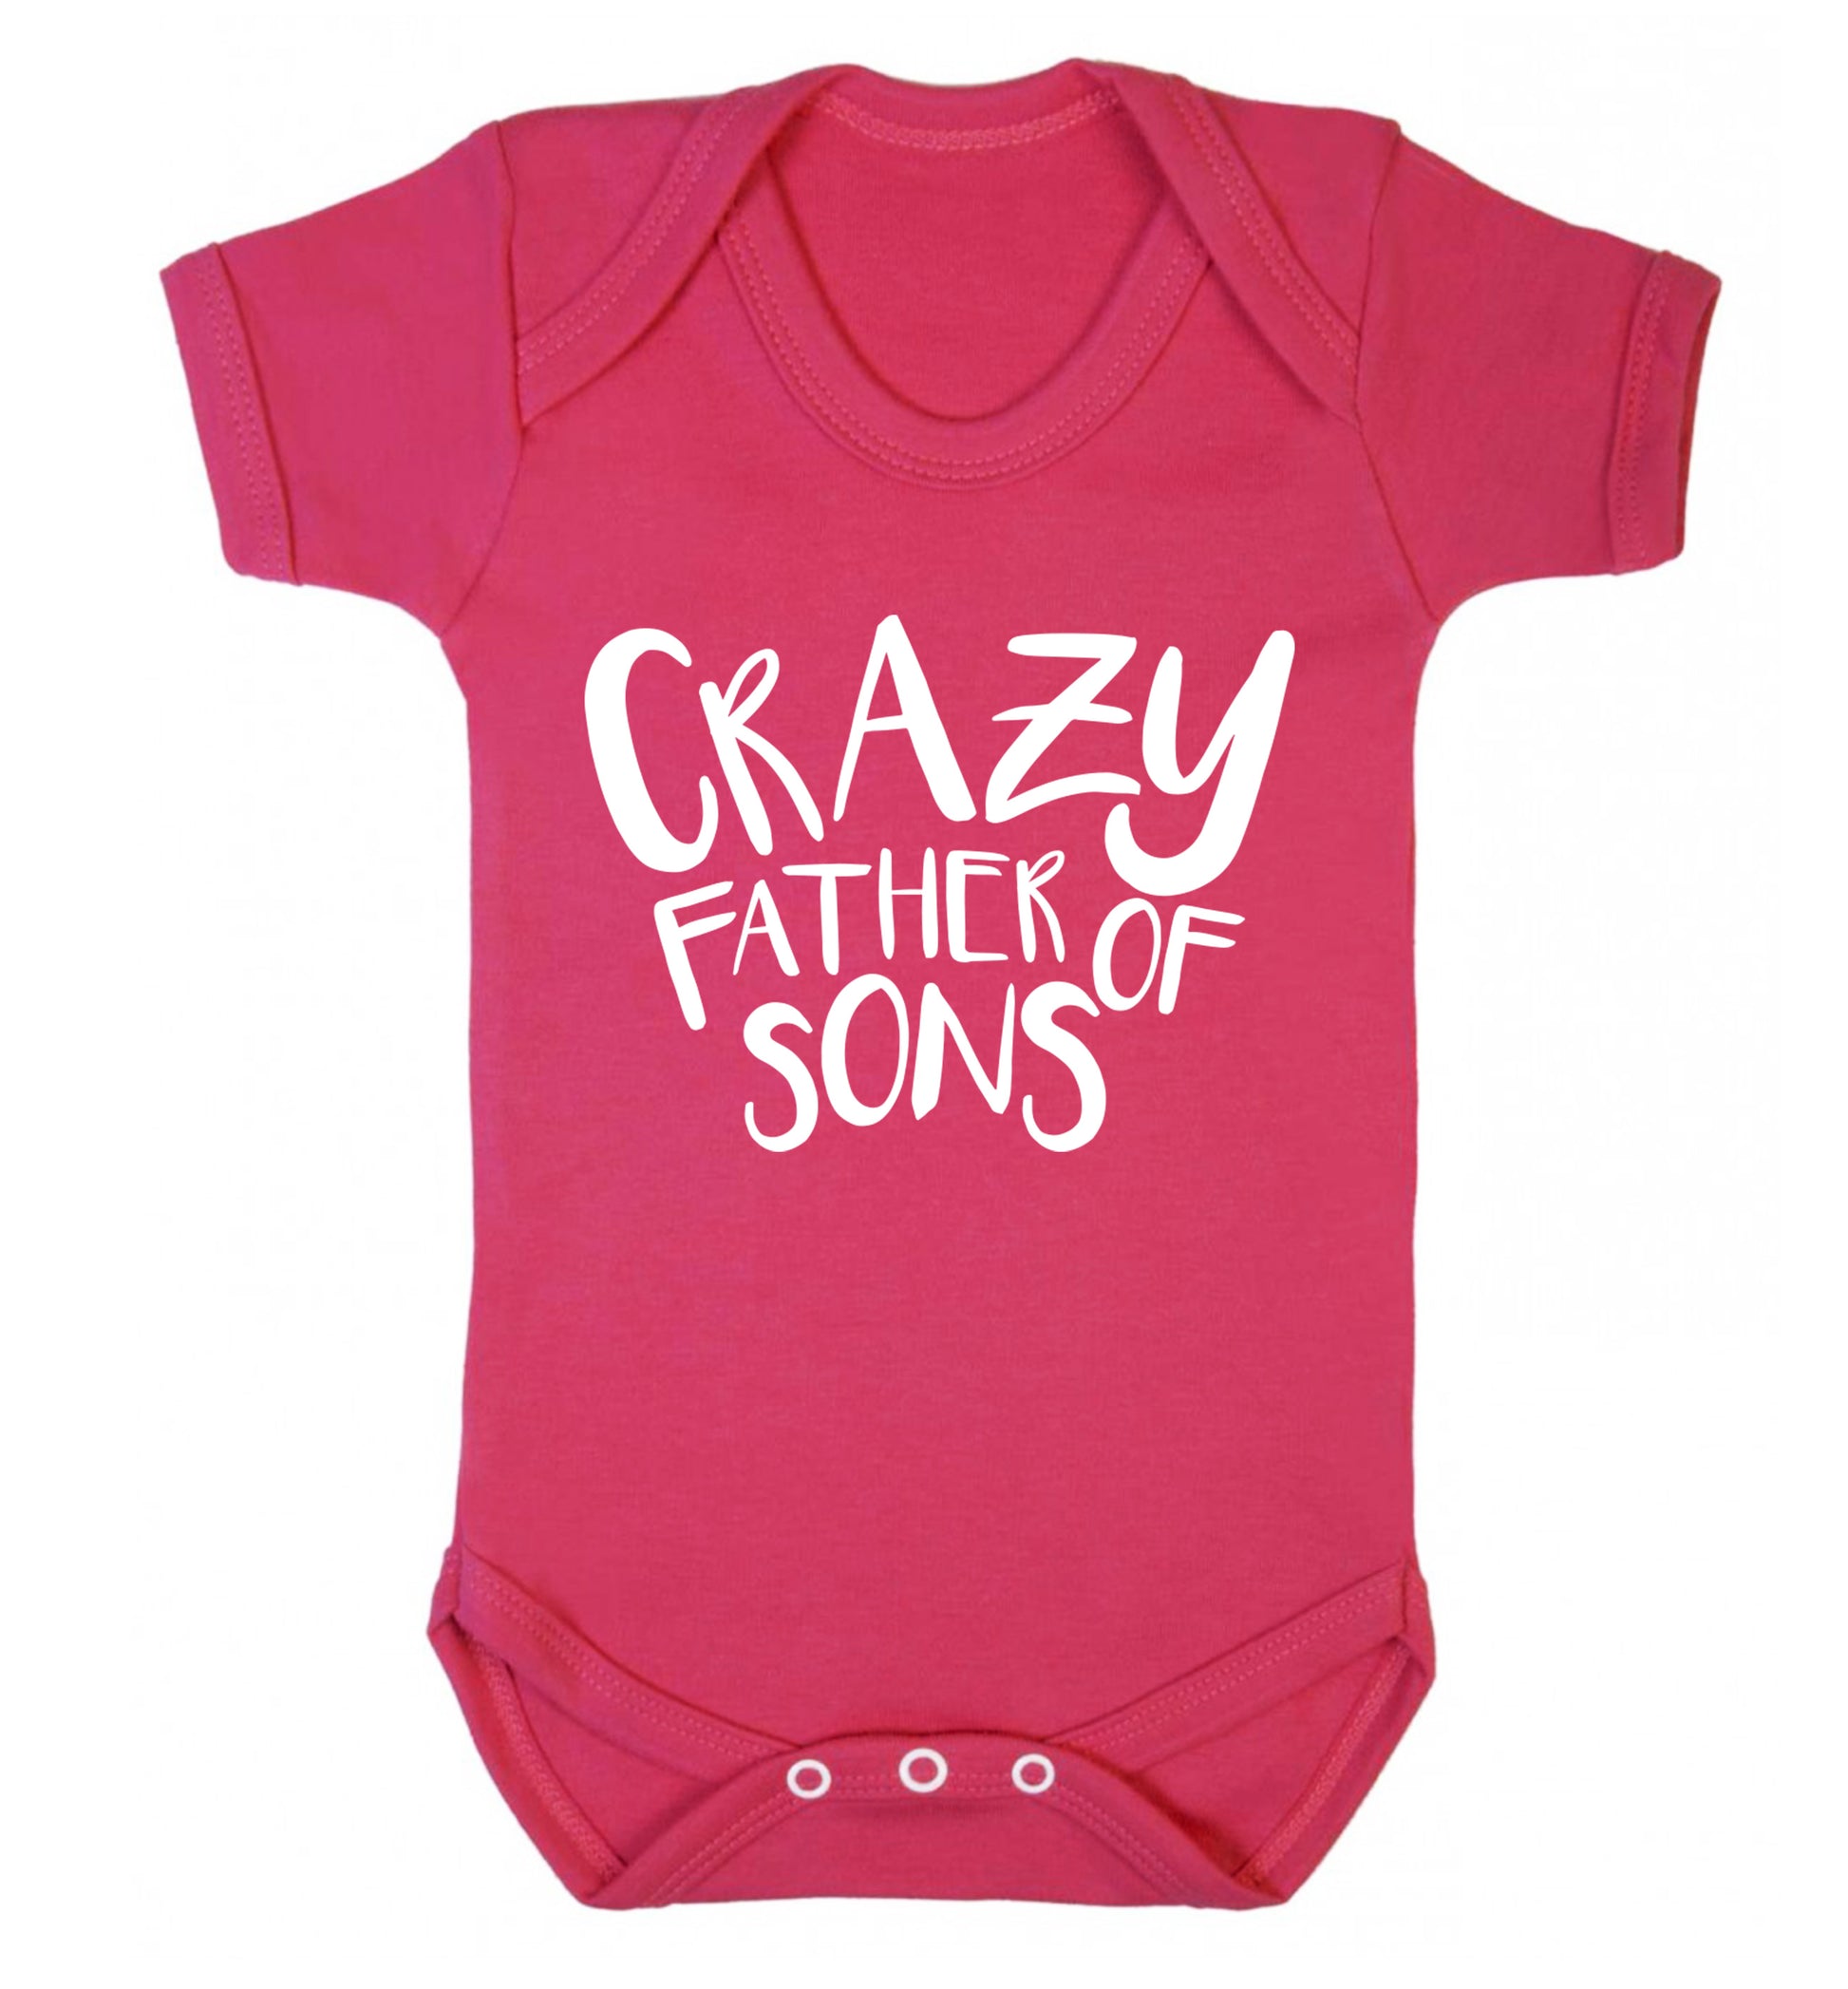 Crazy father of sons Baby Vest dark pink 18-24 months